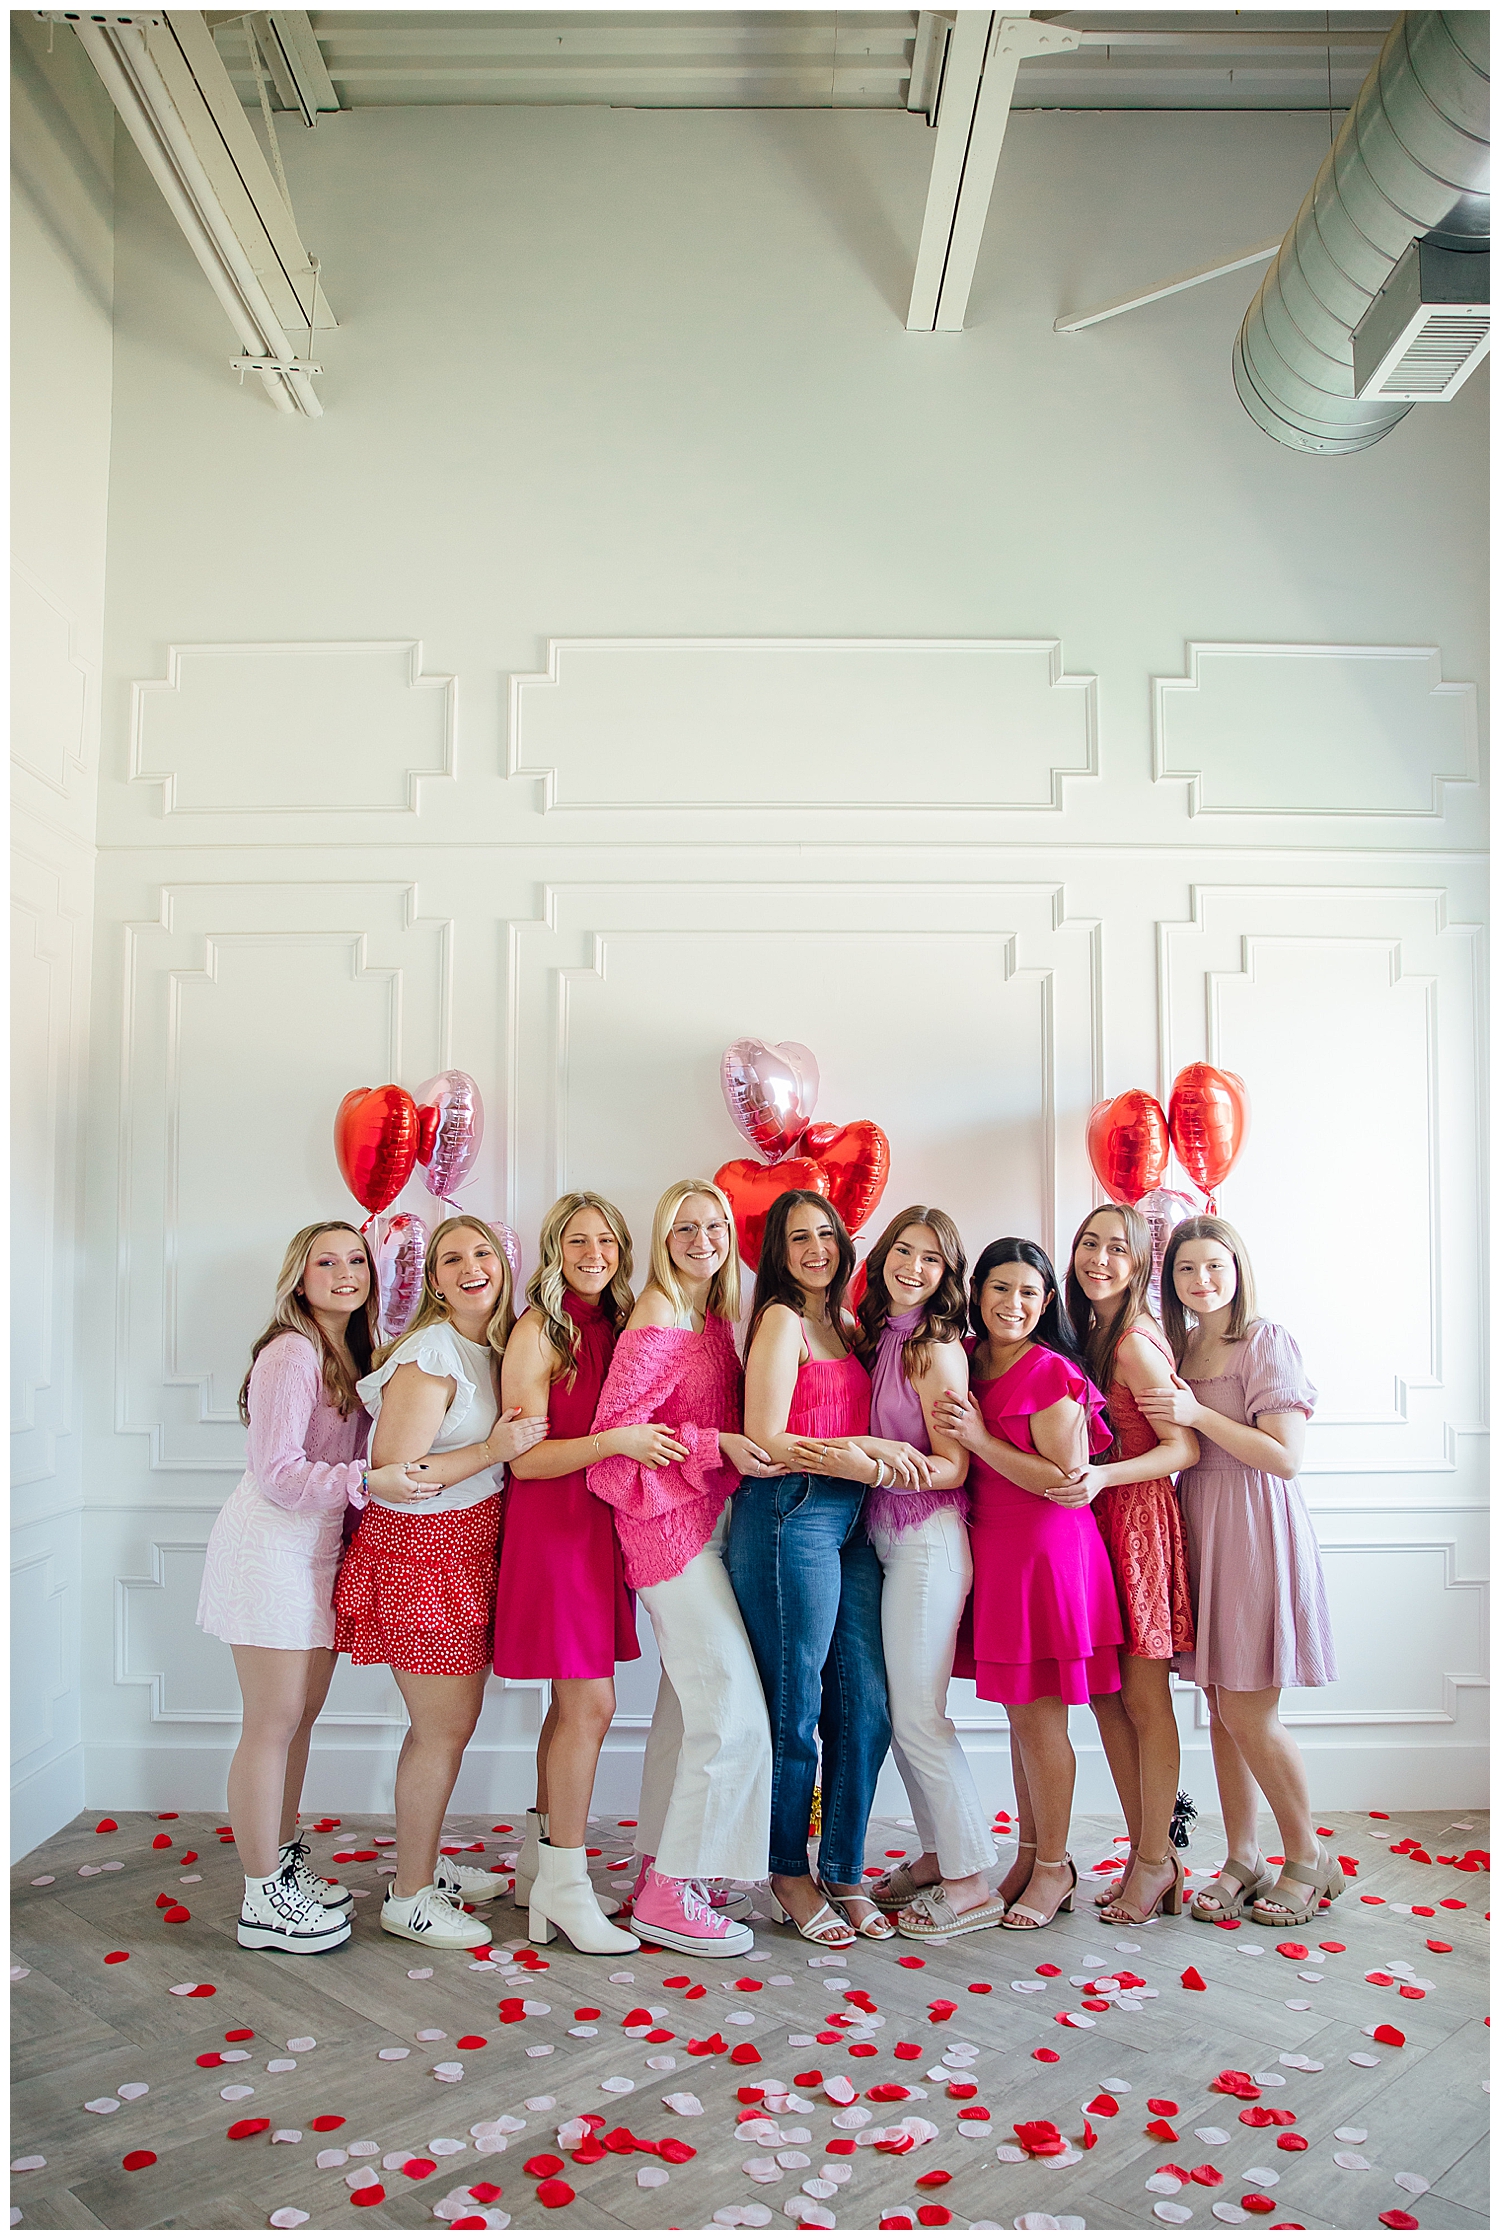 Valentine's Day Senior Photoshoot for Houston model team with heart balloons